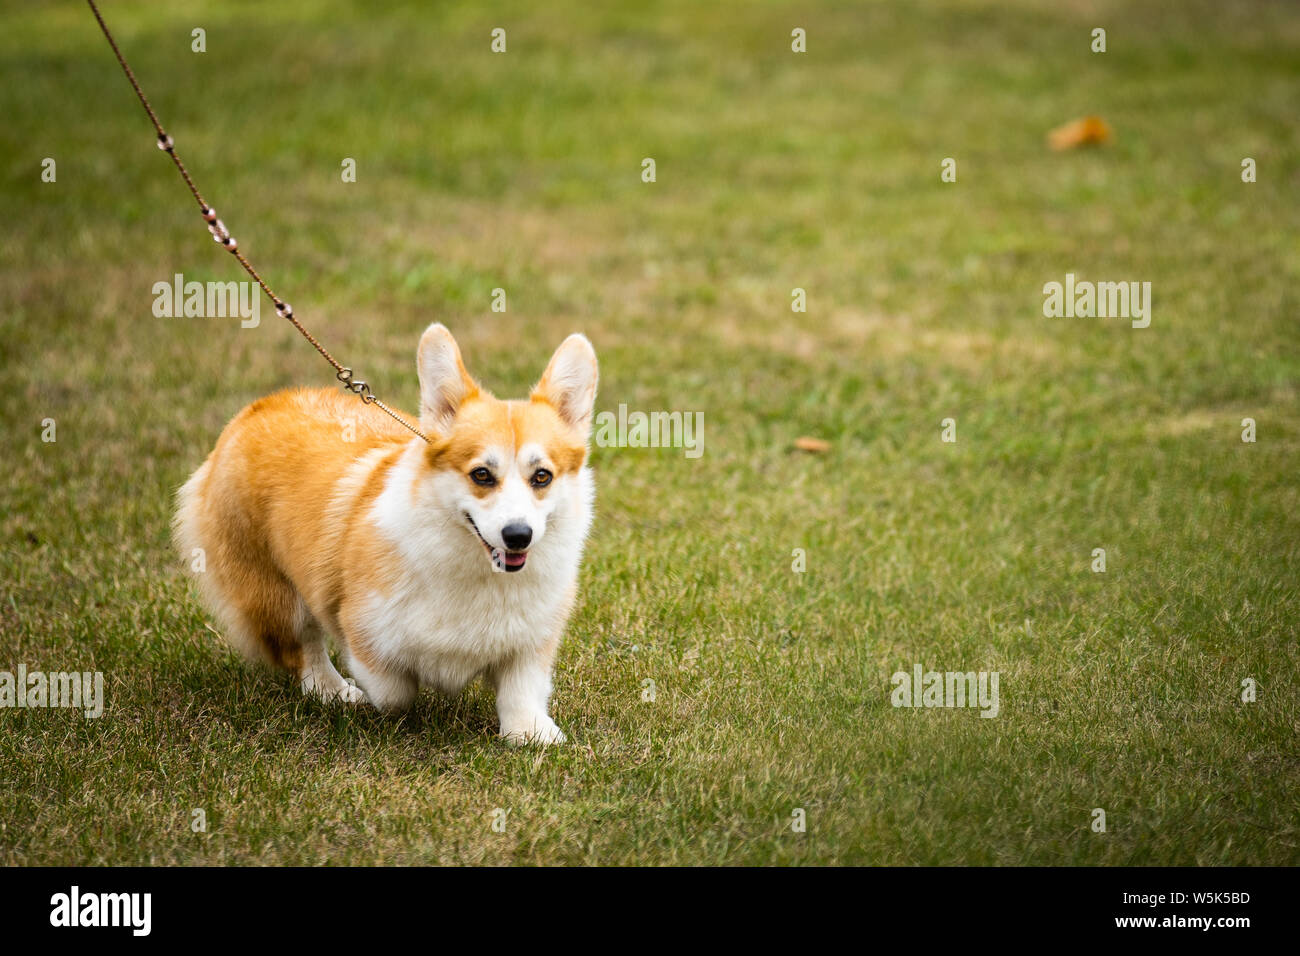 Pembroke welsh corgi dog show hi-res stock photography and images - Alamy